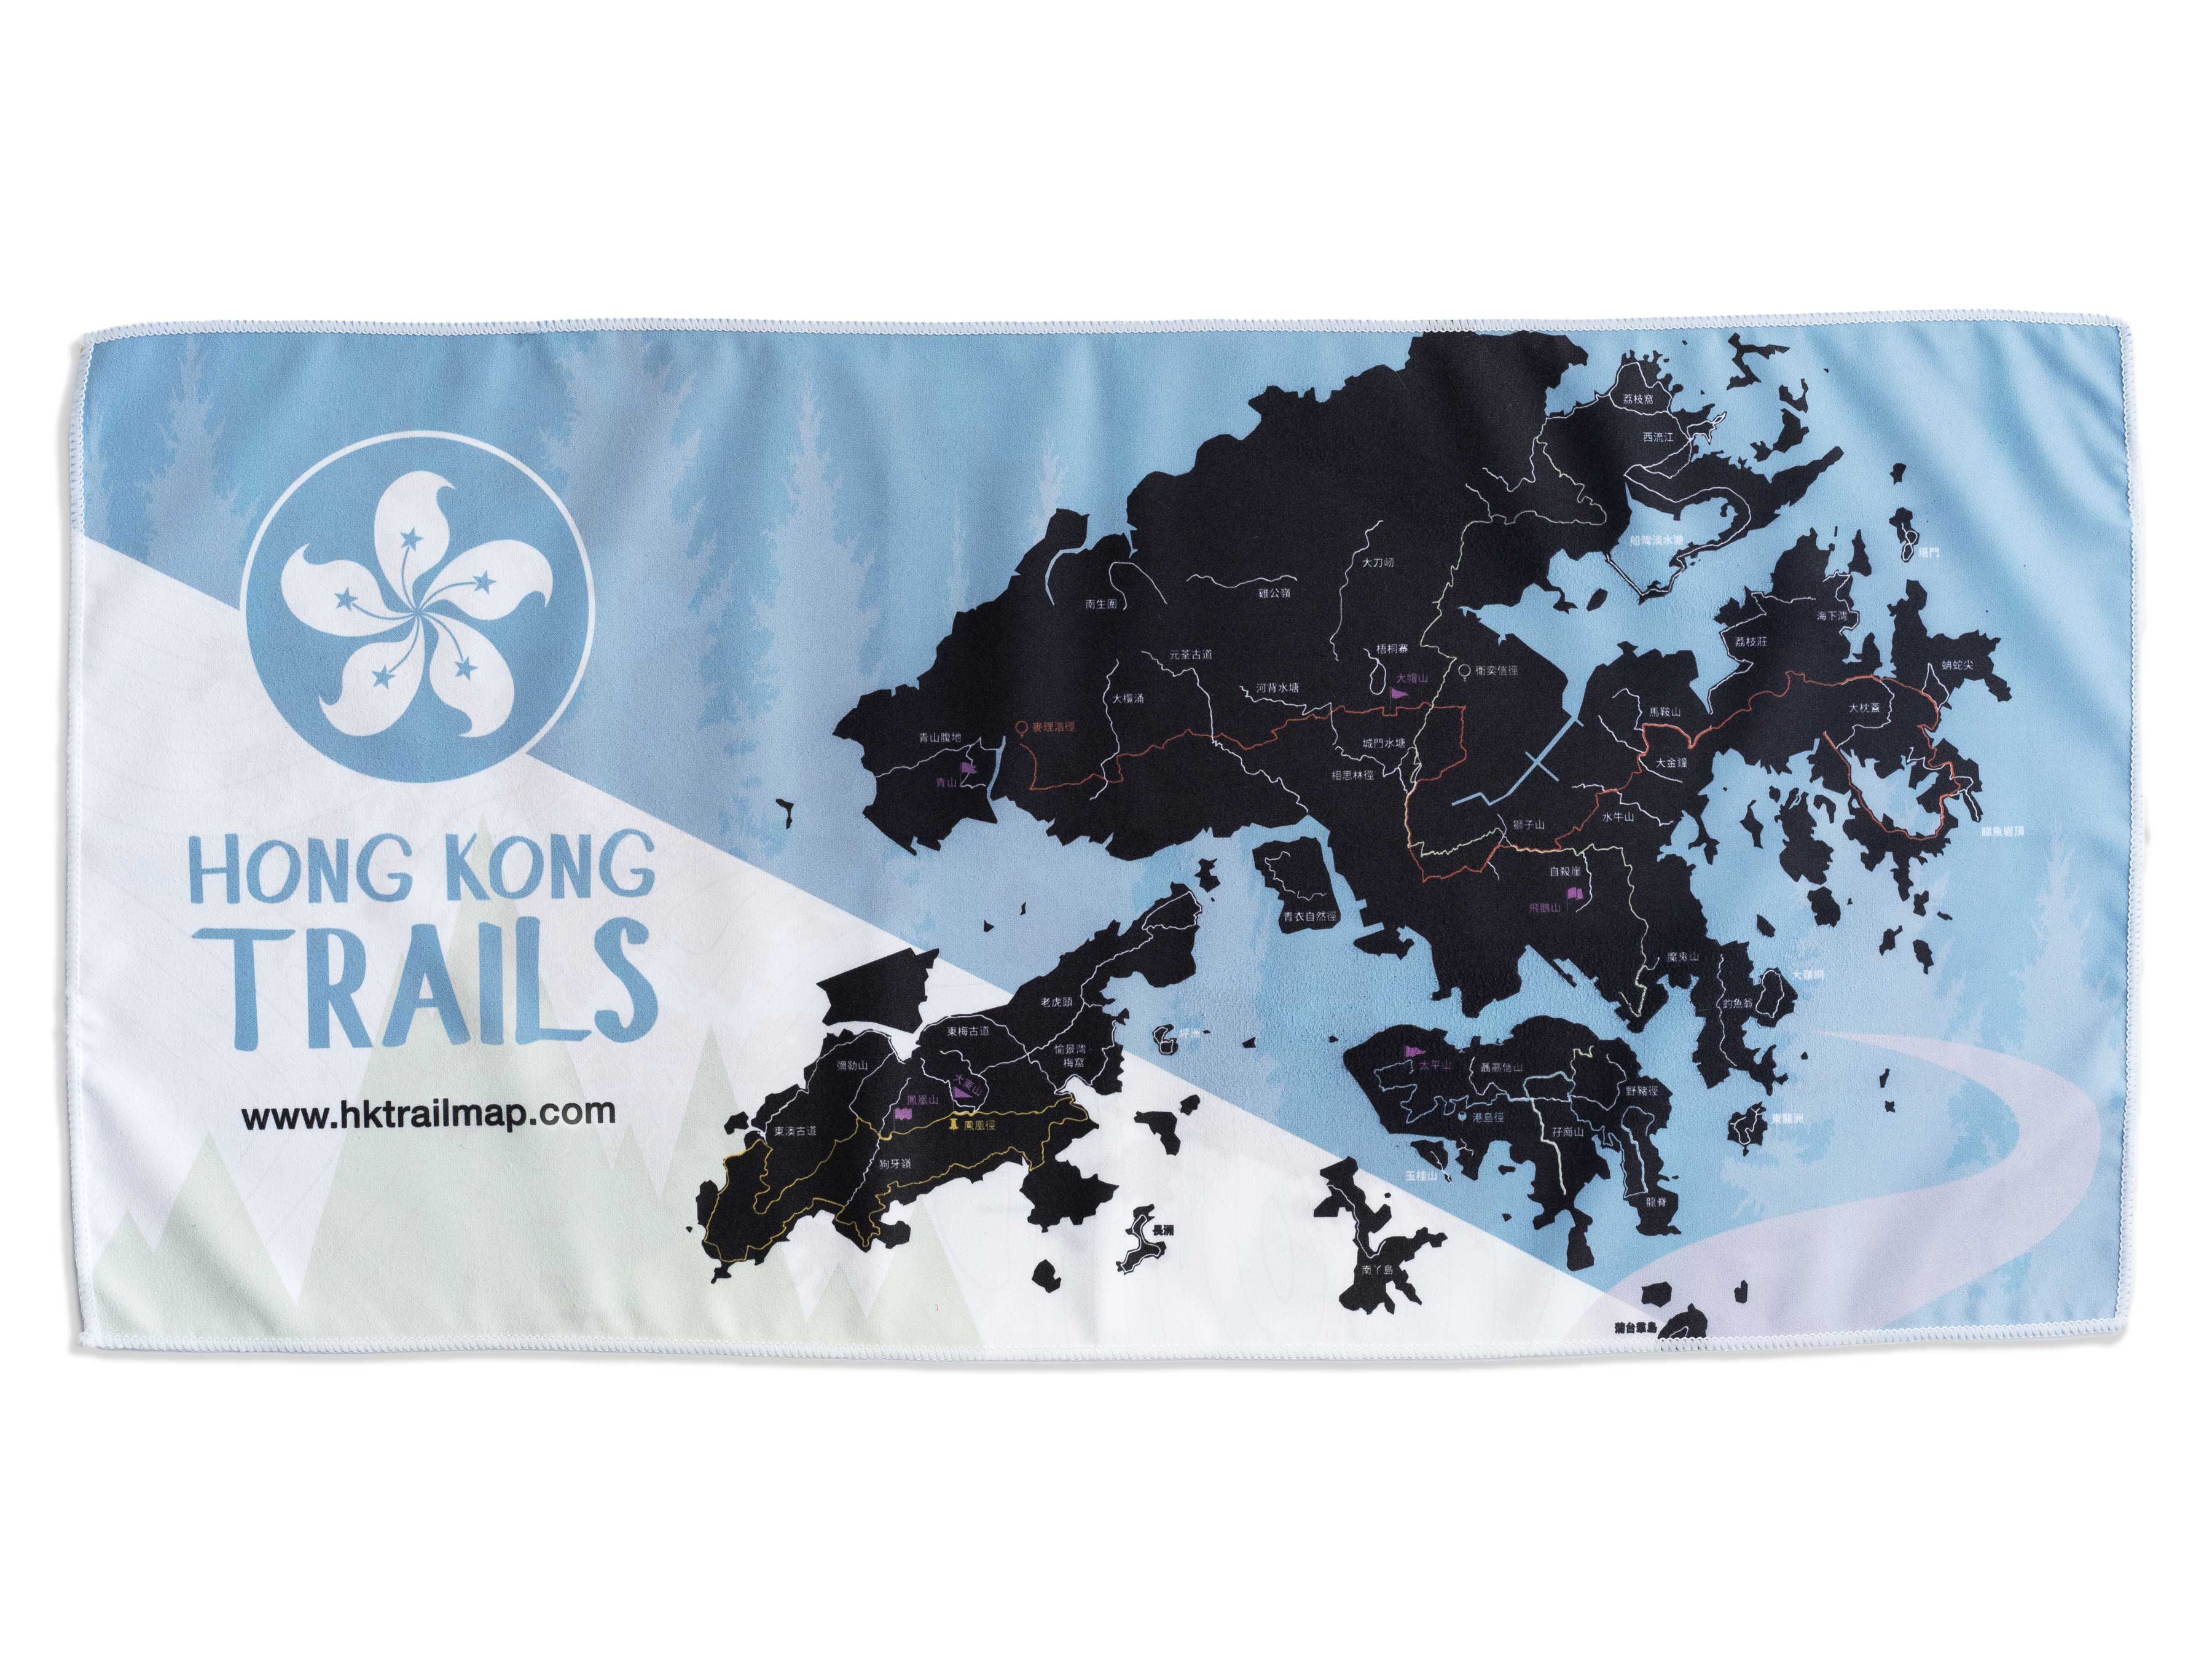 Bilingual Blue Map Hiking Towel by Hong Kong Trails